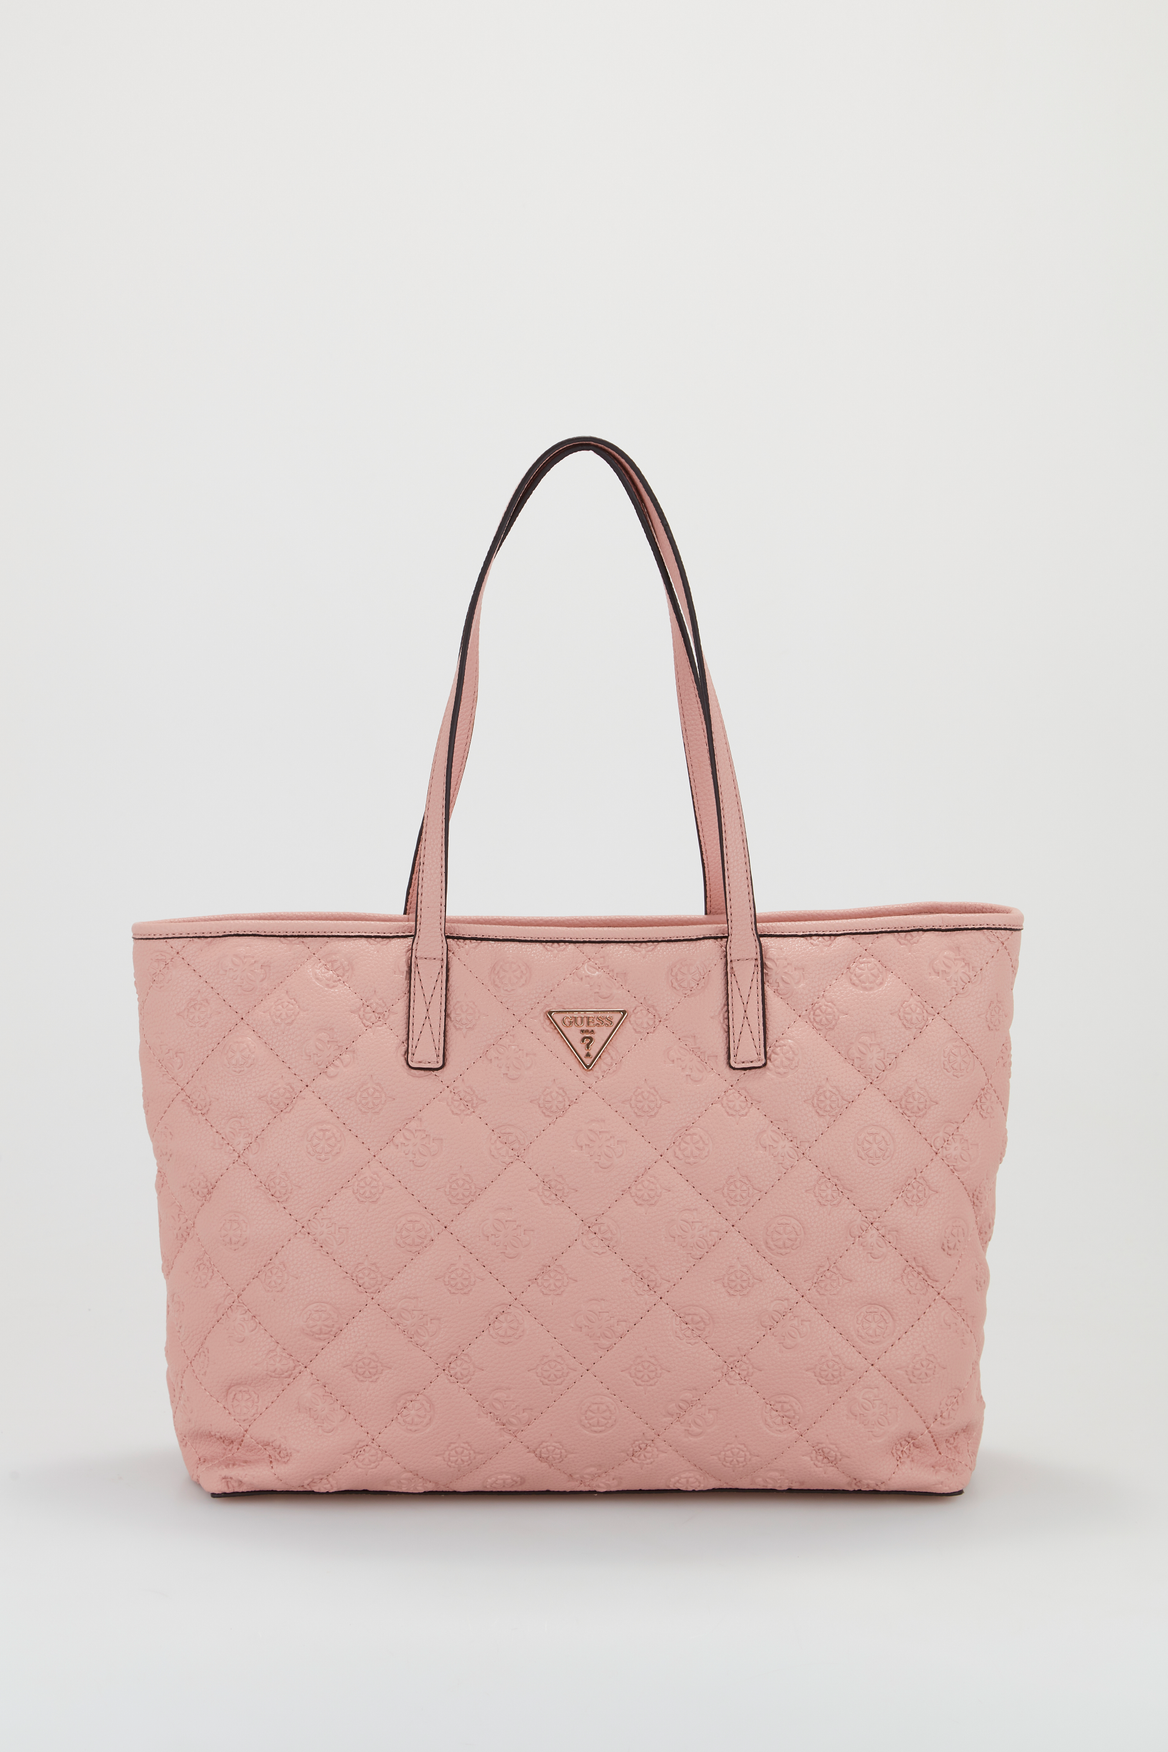 NEW GUESS Women's Light Pink Quilted Luxury Satchel Crossbody Handbag Purse